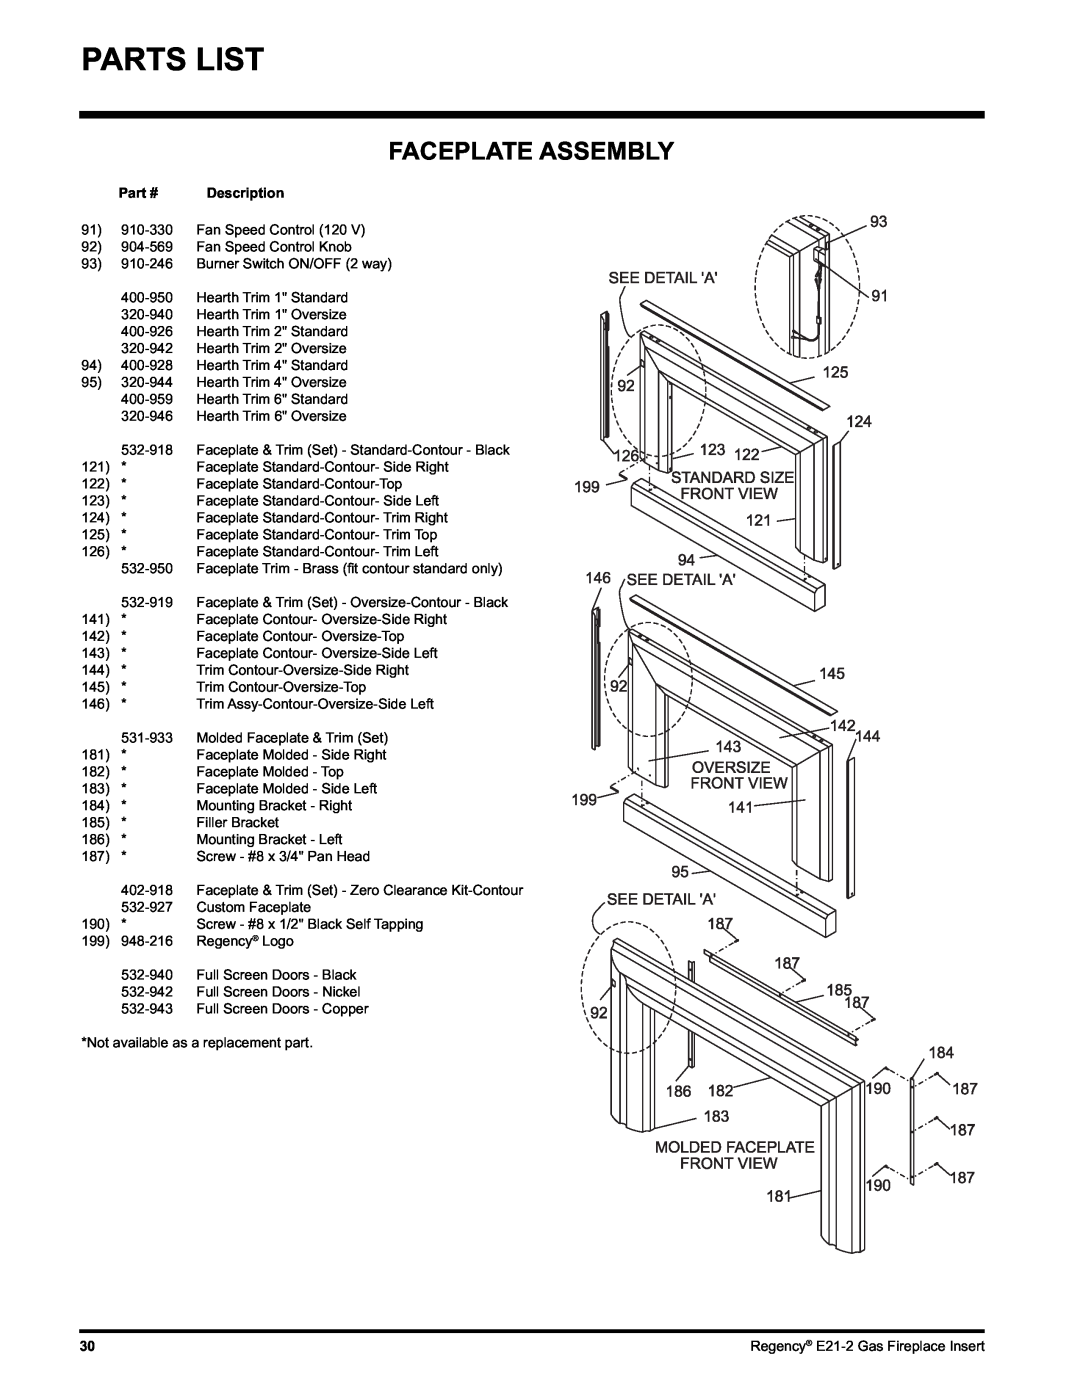 Regency E21-LP2, E21-NG2 installation manual Parts List, Faceplate Assembly, Description 